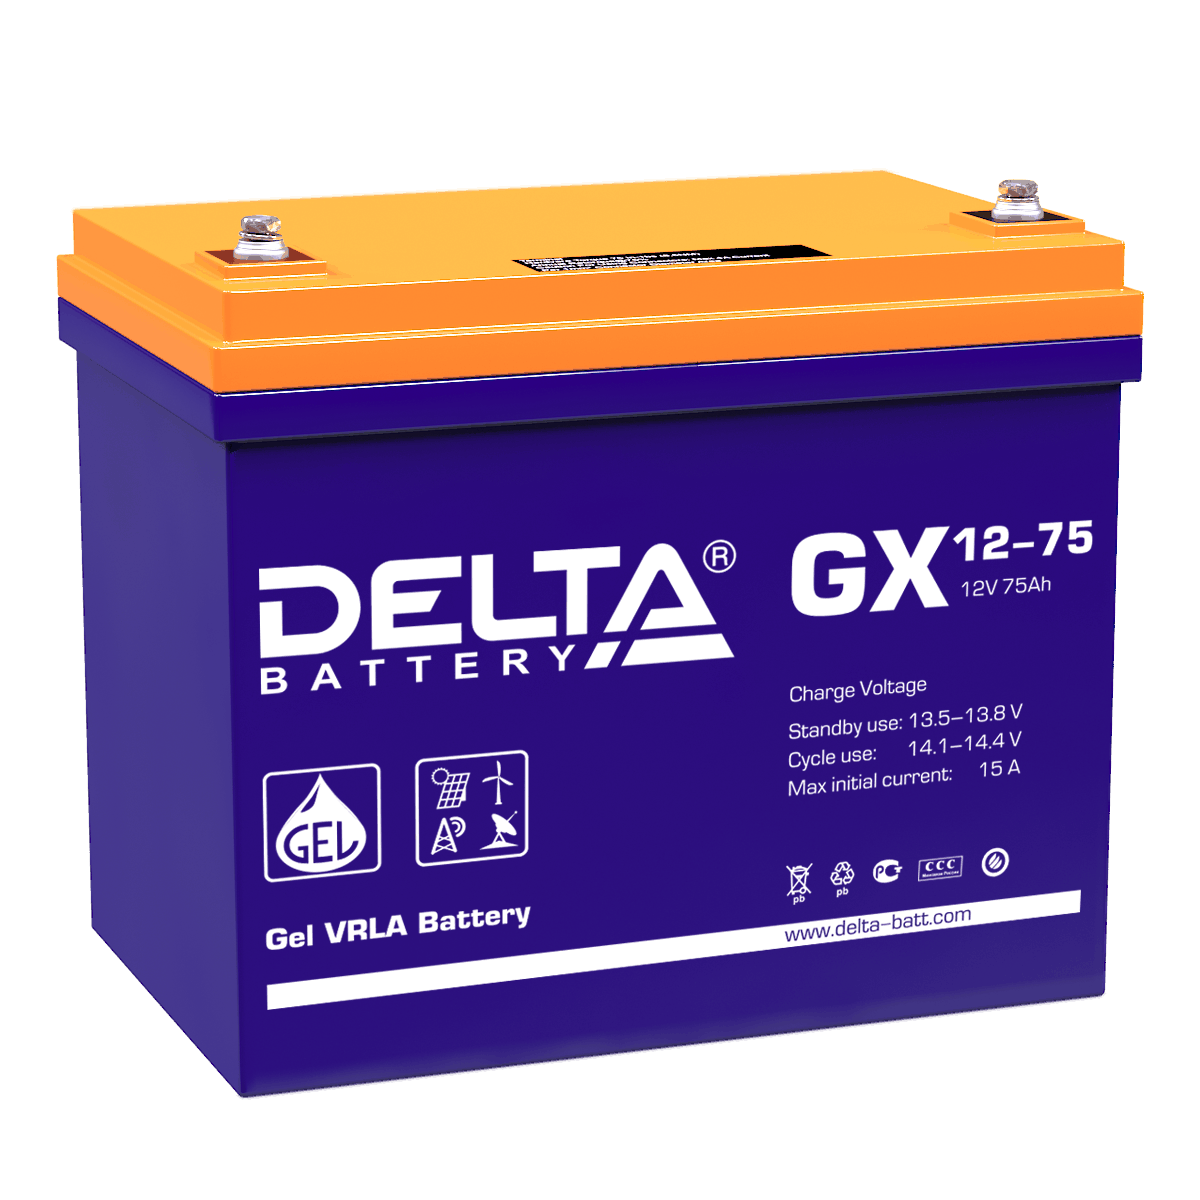 Delta GX 12-75